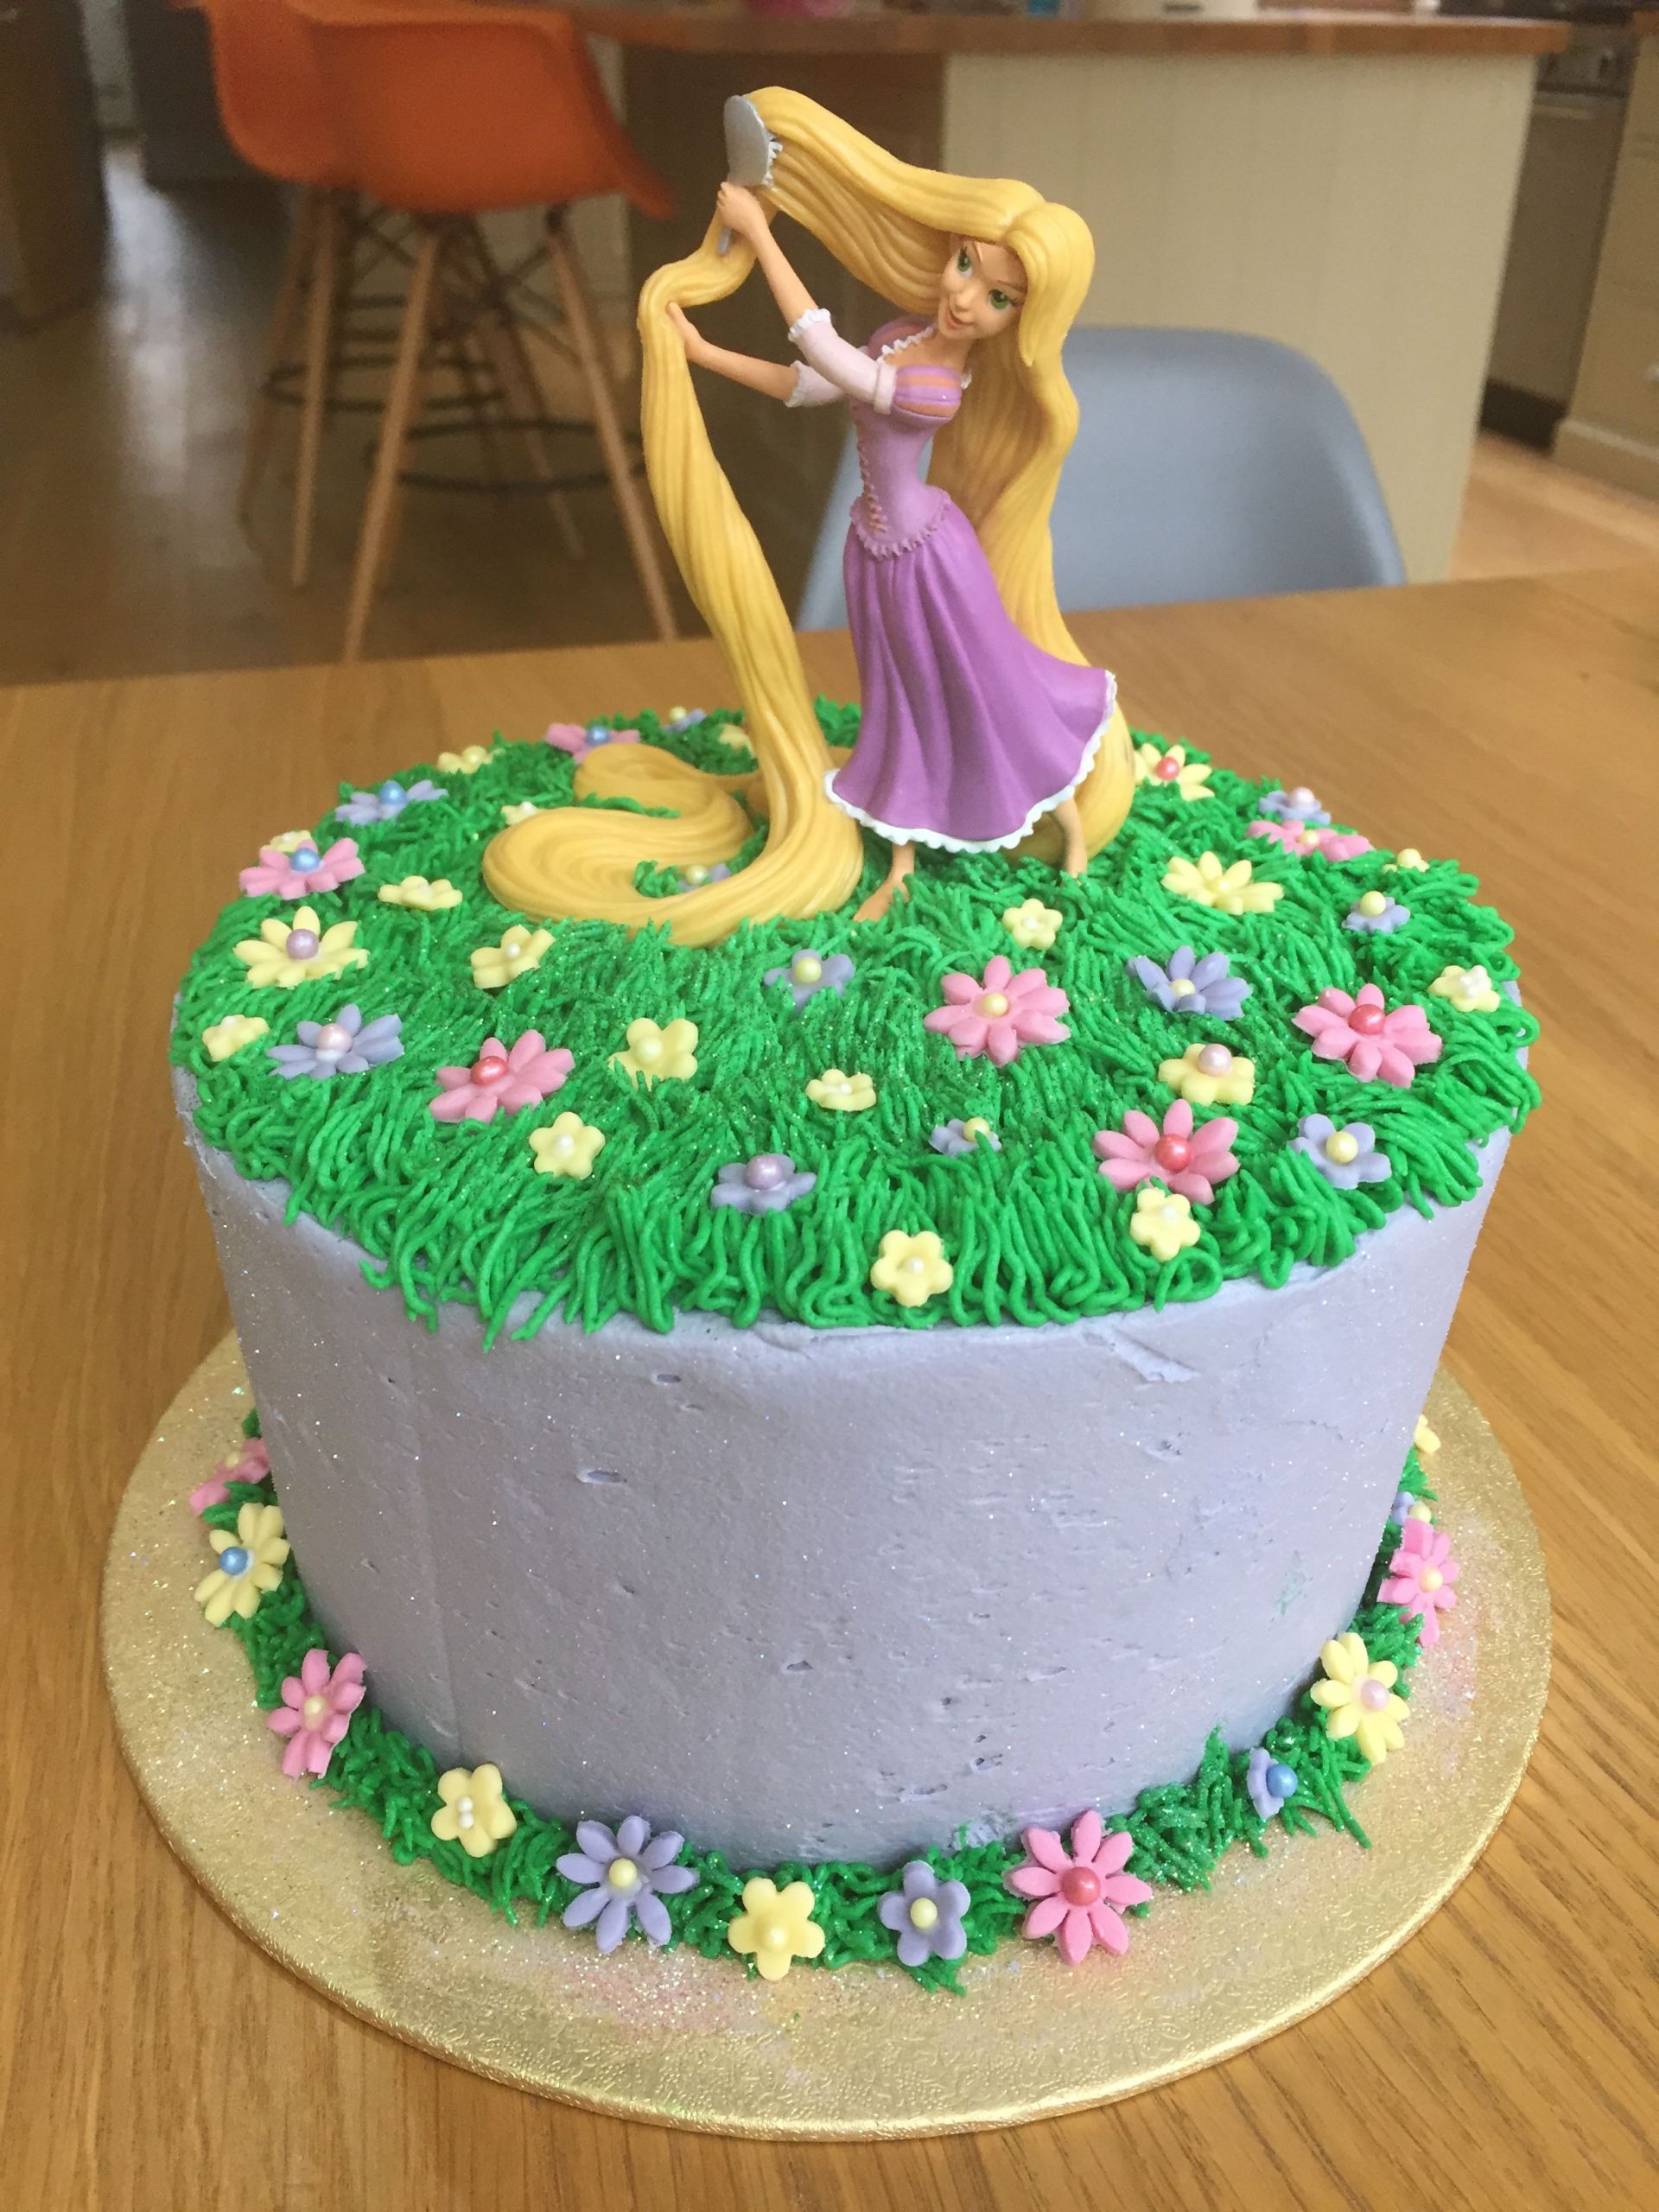 Tangled Birthday Cake
 Rapunzel birthday cake